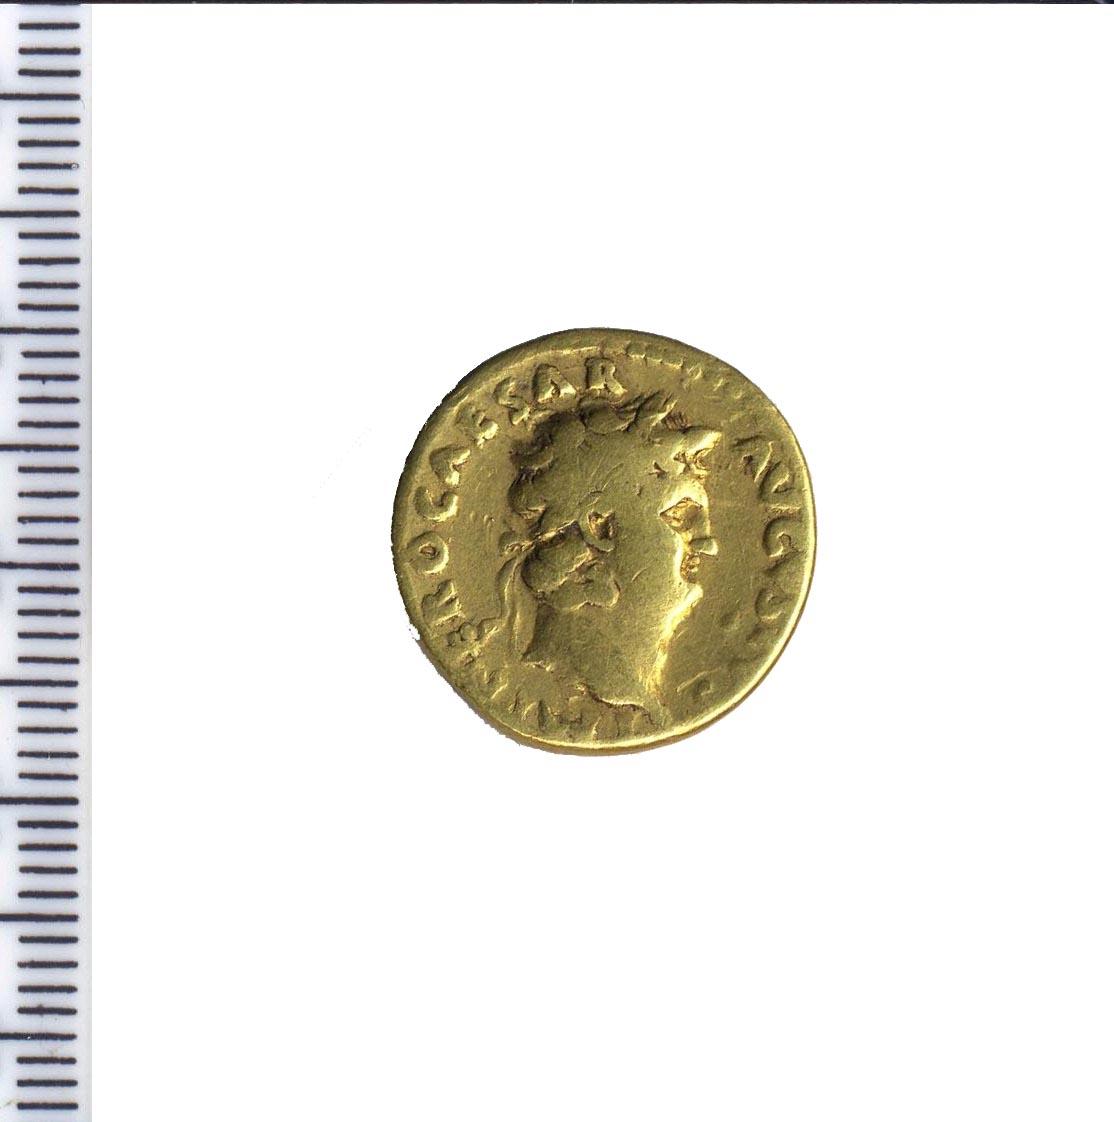 moneta - aureo - produzione romana imperiale (sec. I d.C)